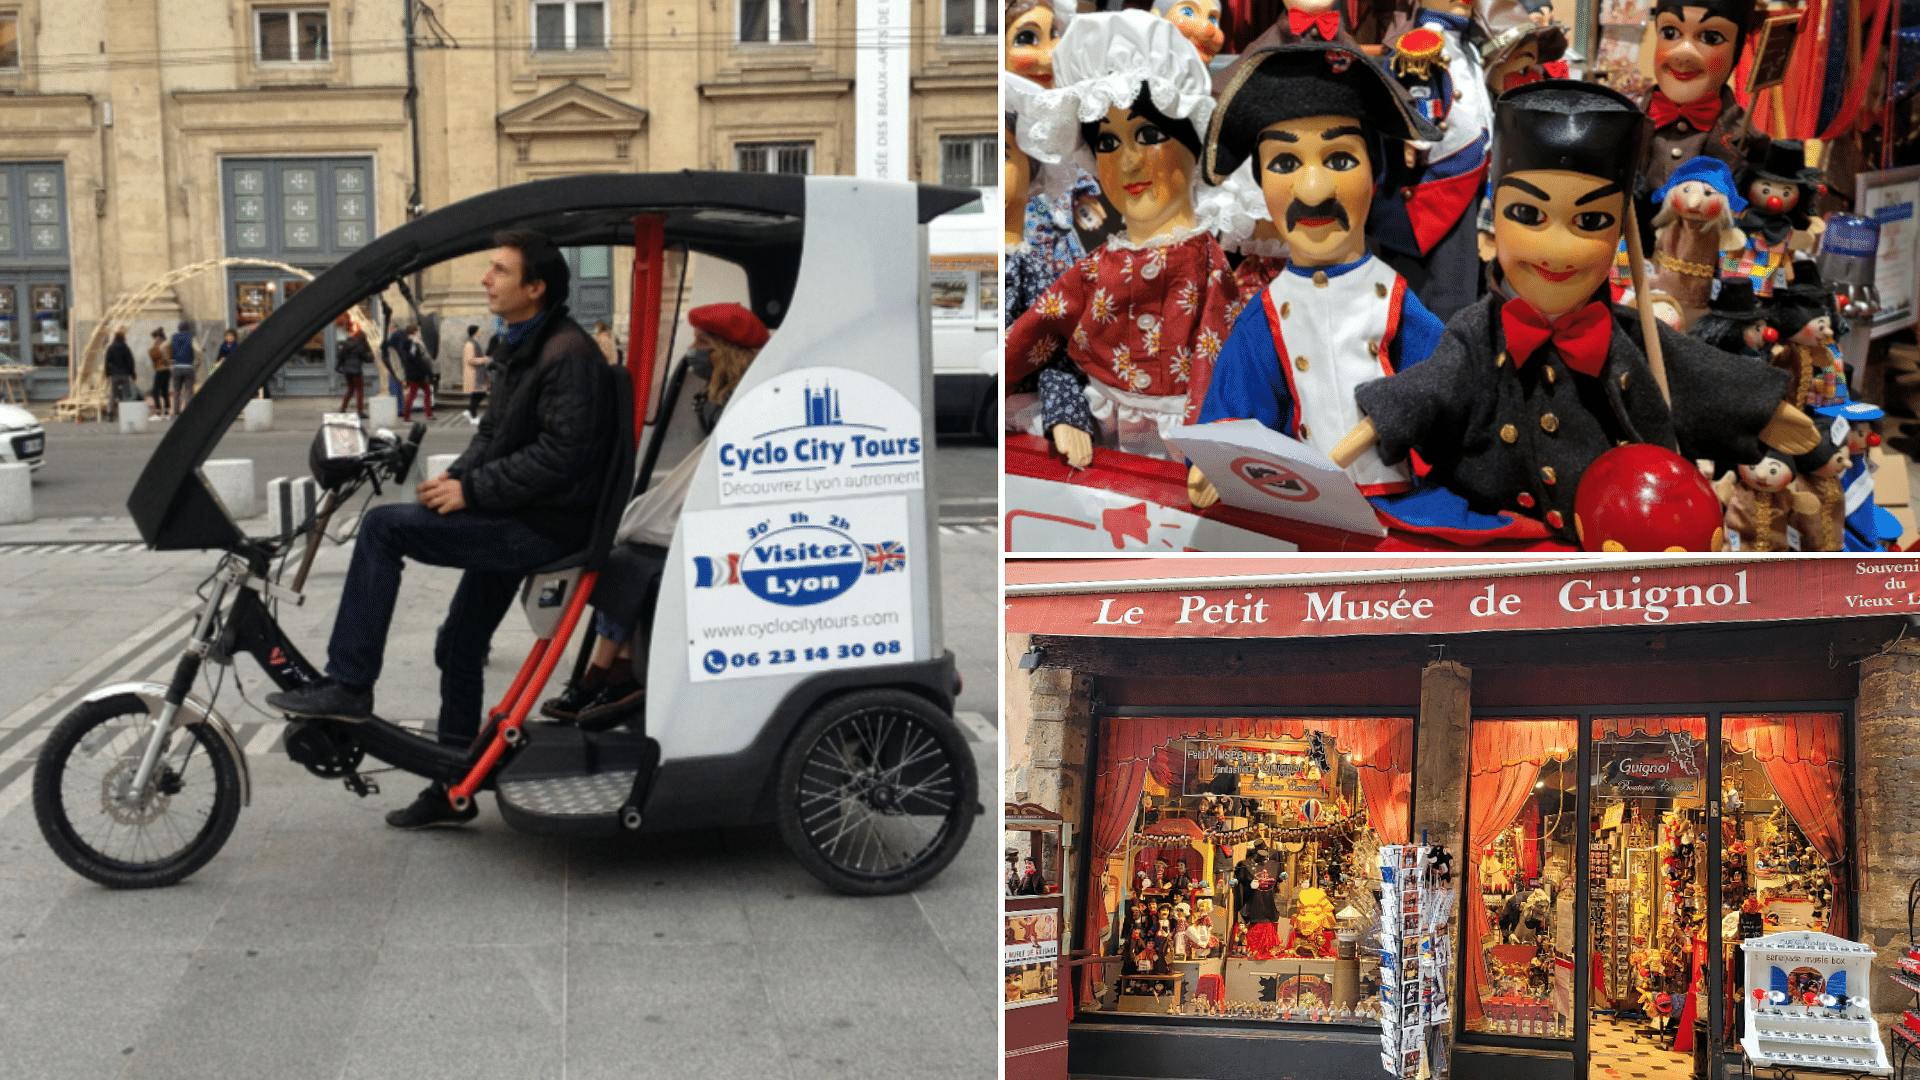 360 pedicab tour of Lyon with Guignol museum visit